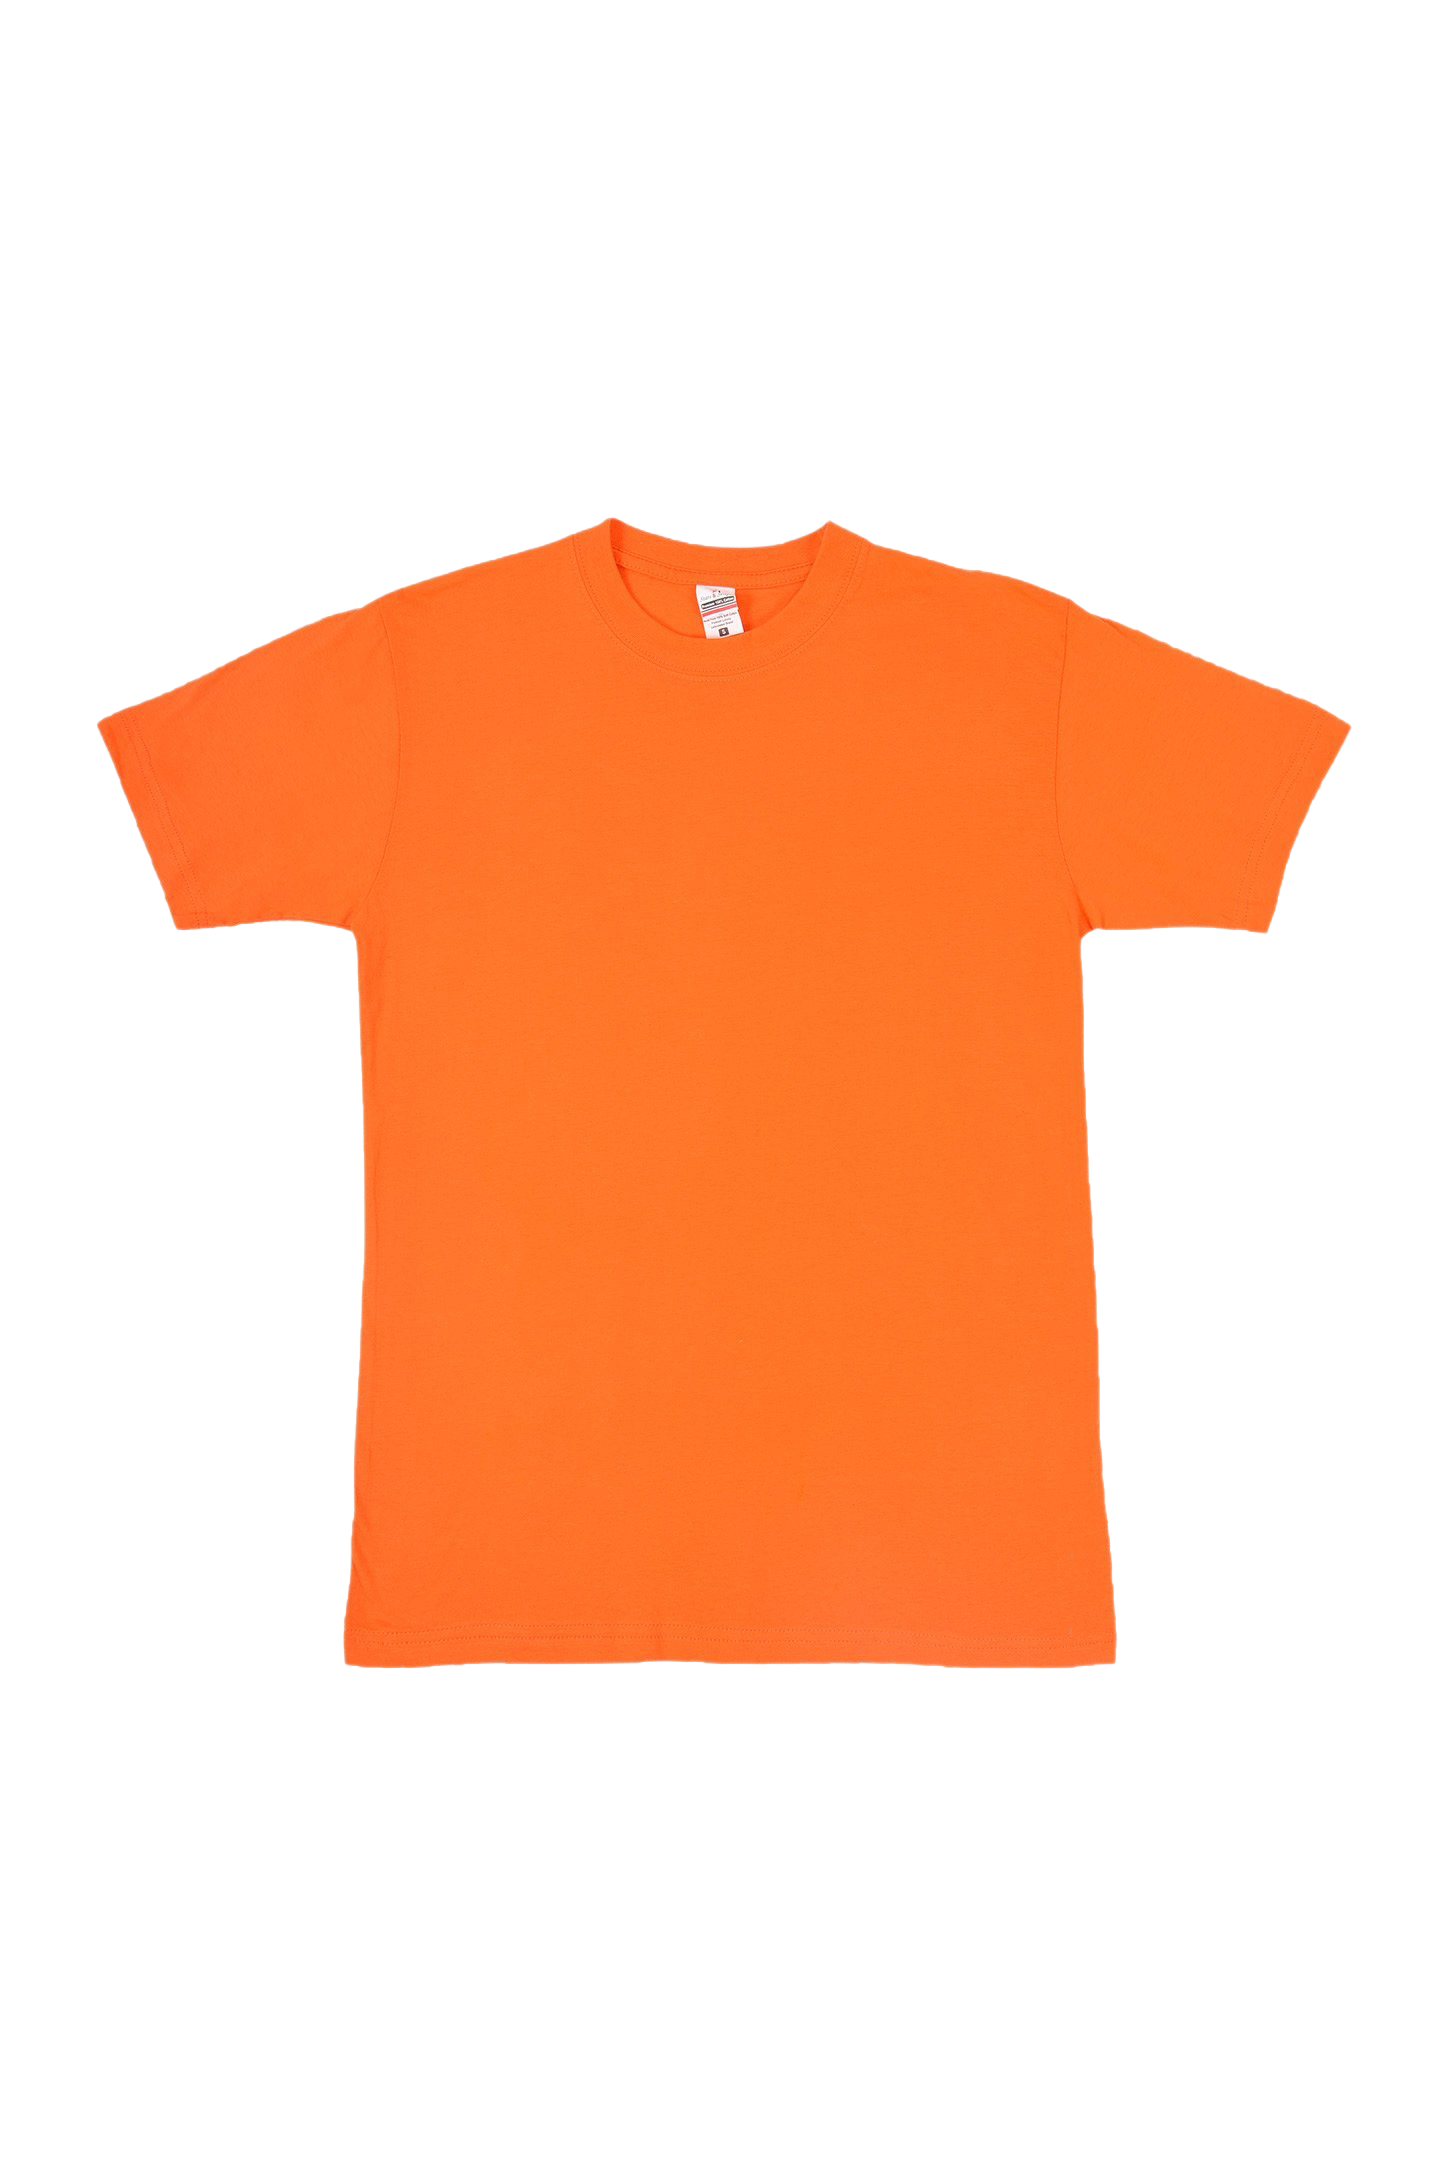 T-shirt de laranja simples PNG imagem